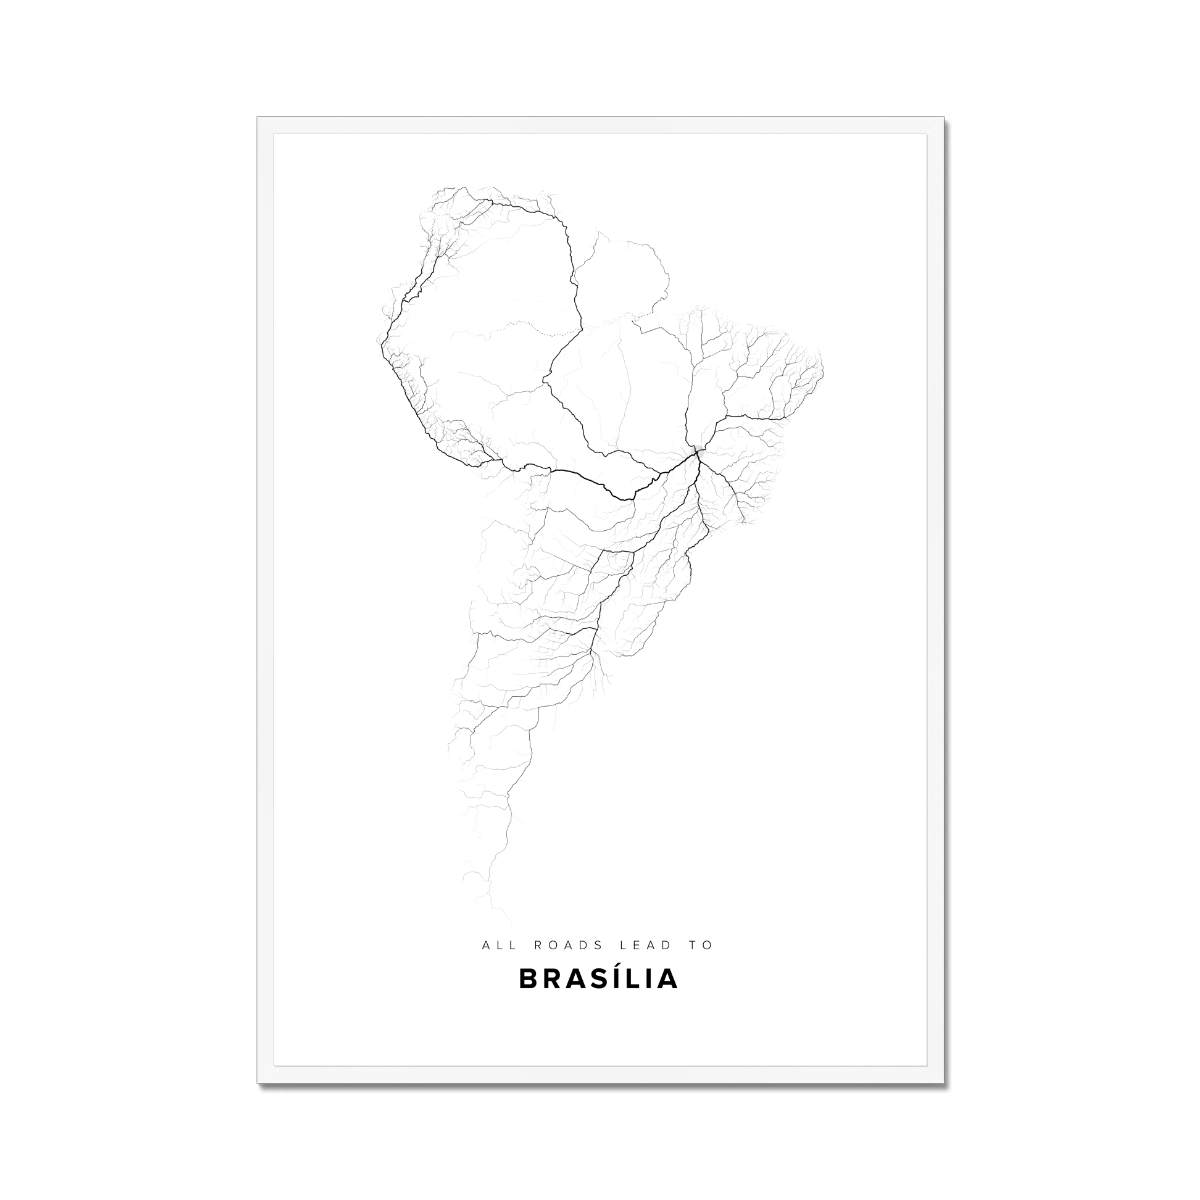 All roads lead to Brasília (Brazil) Fine Art Map Print